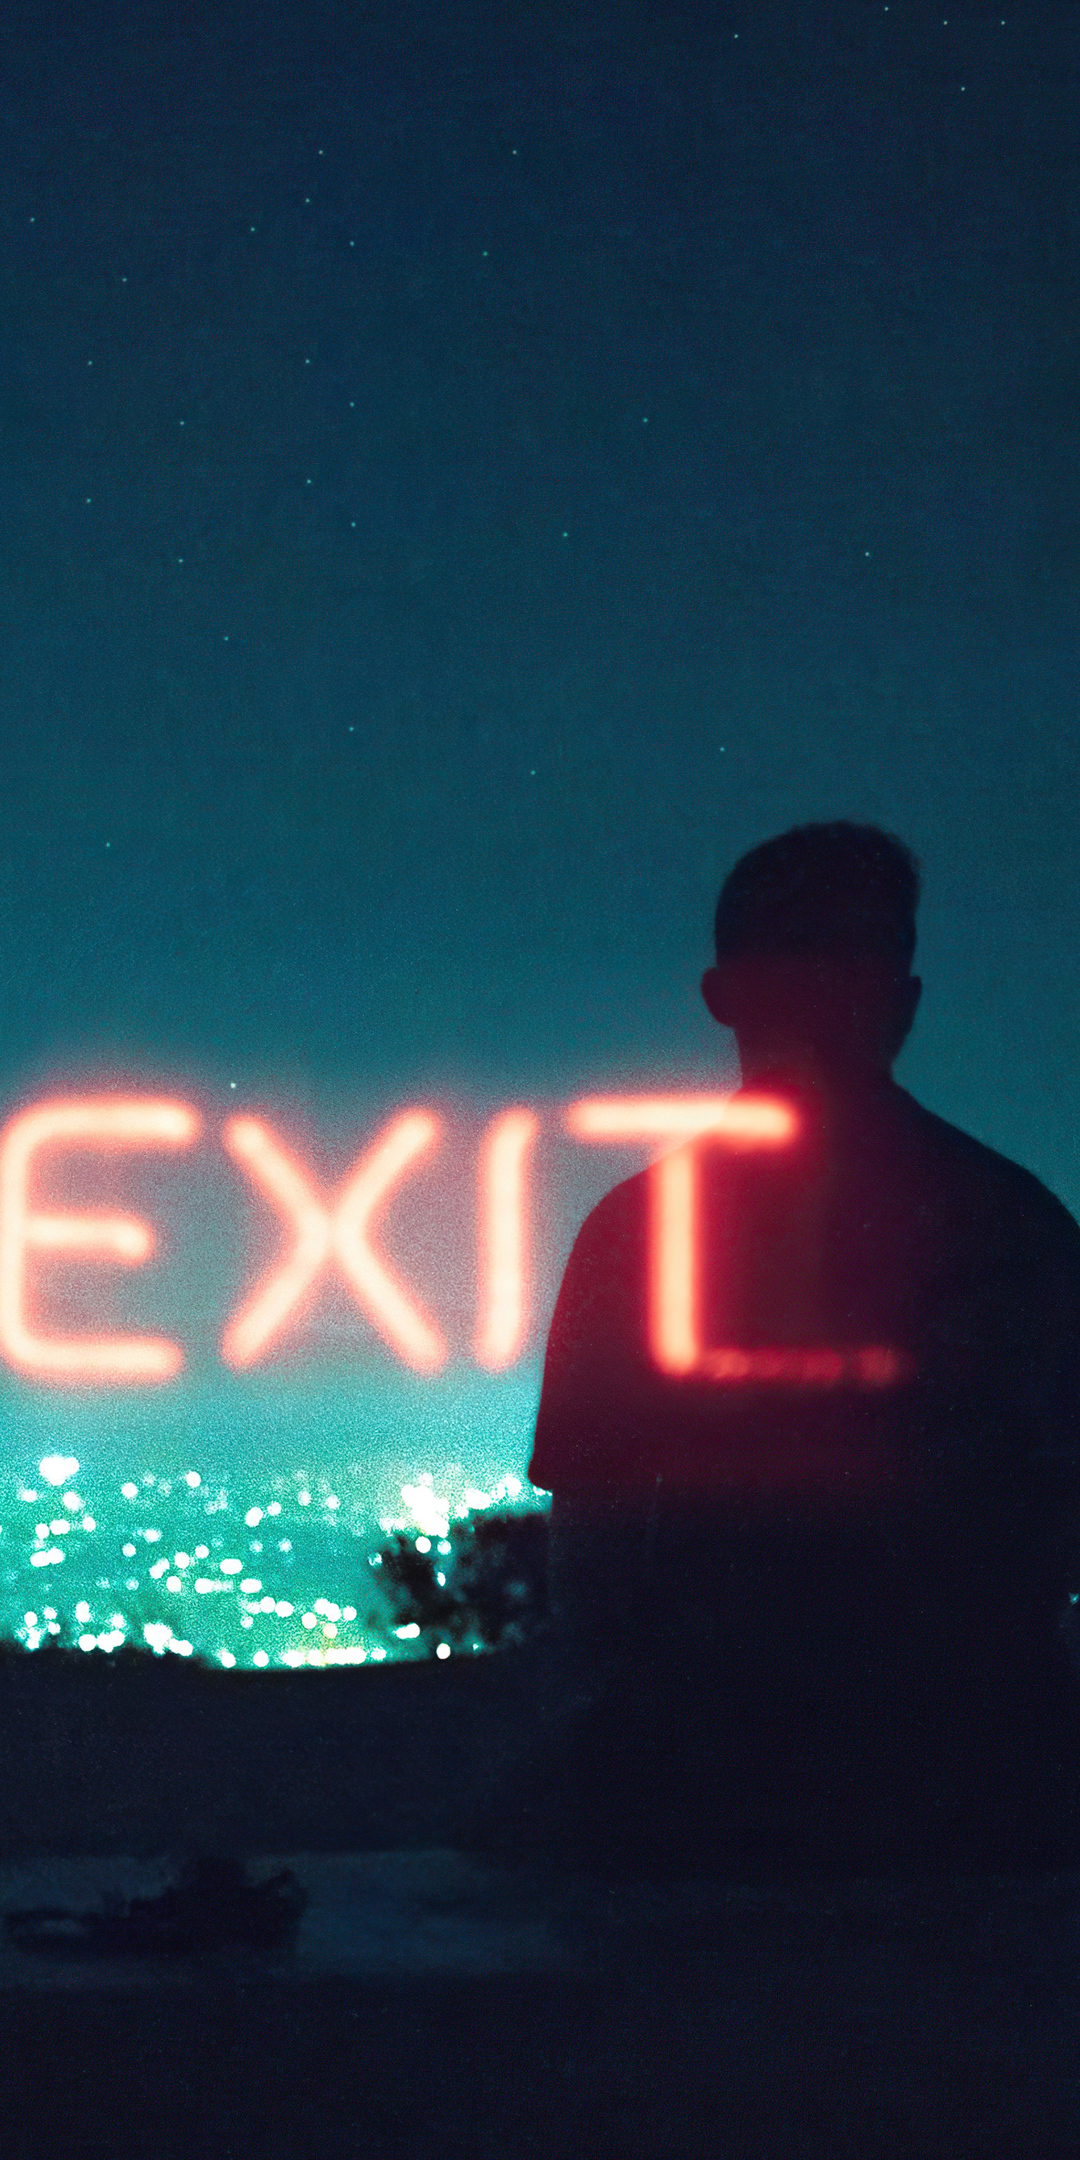 exit-neon-boy-standing-silhouette-z0.jpg